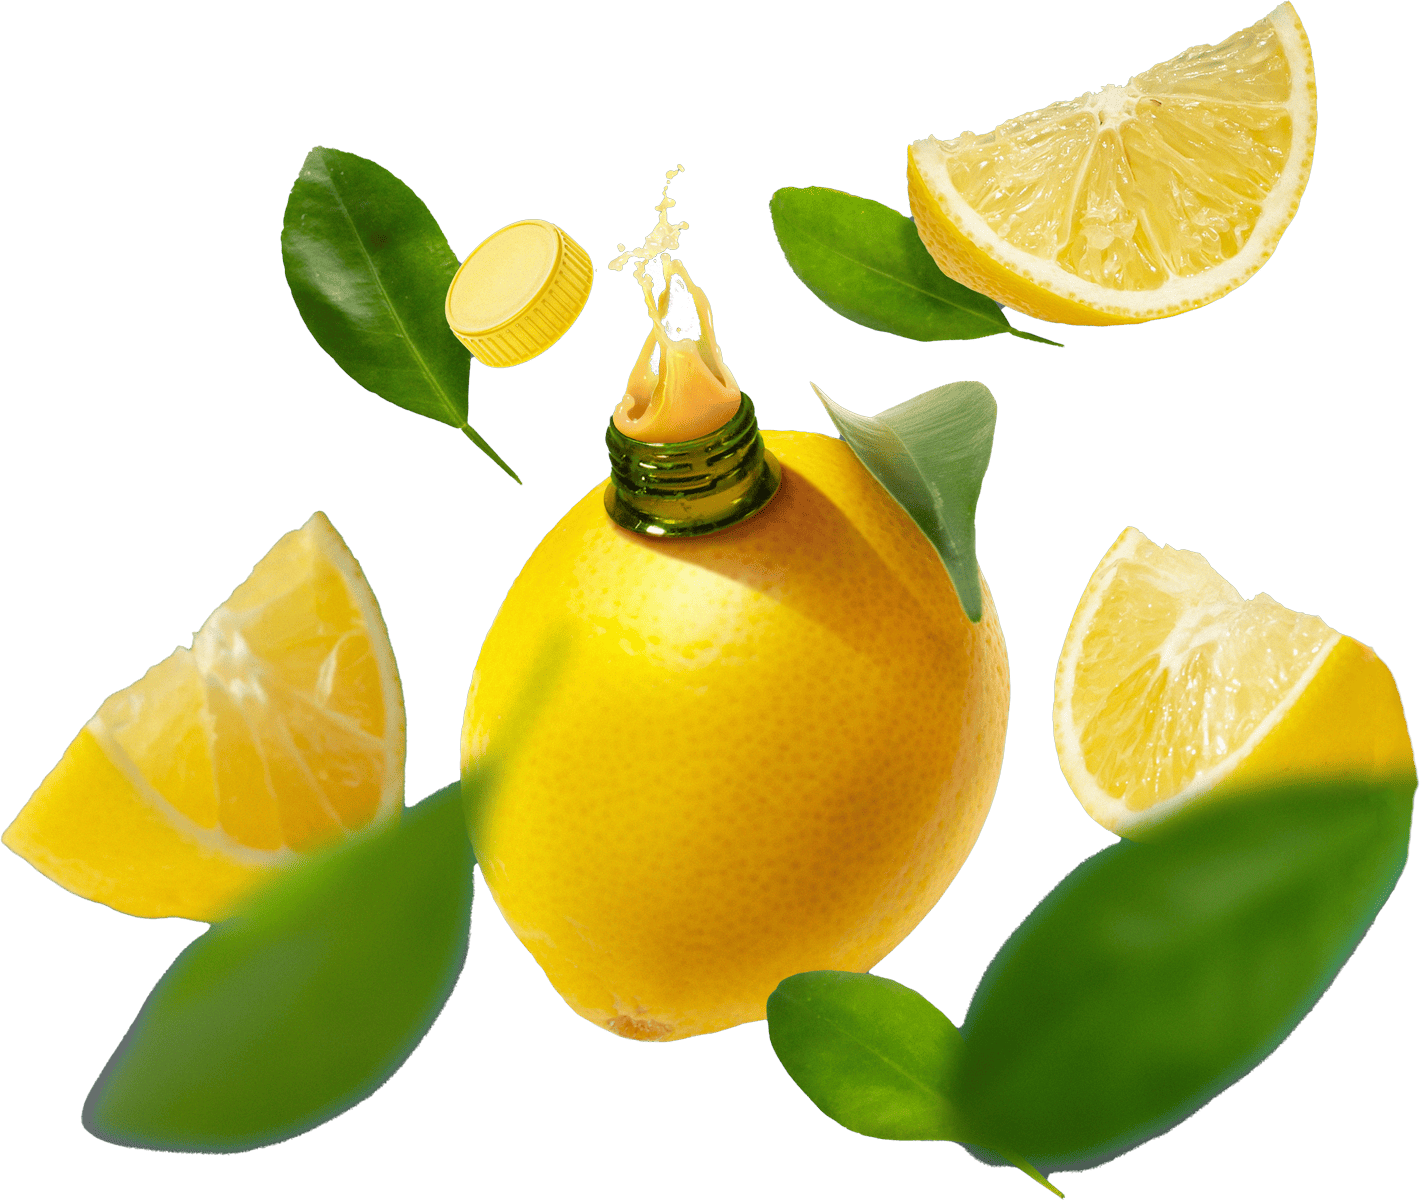 A lemon digital marketing agency is flying in the air.